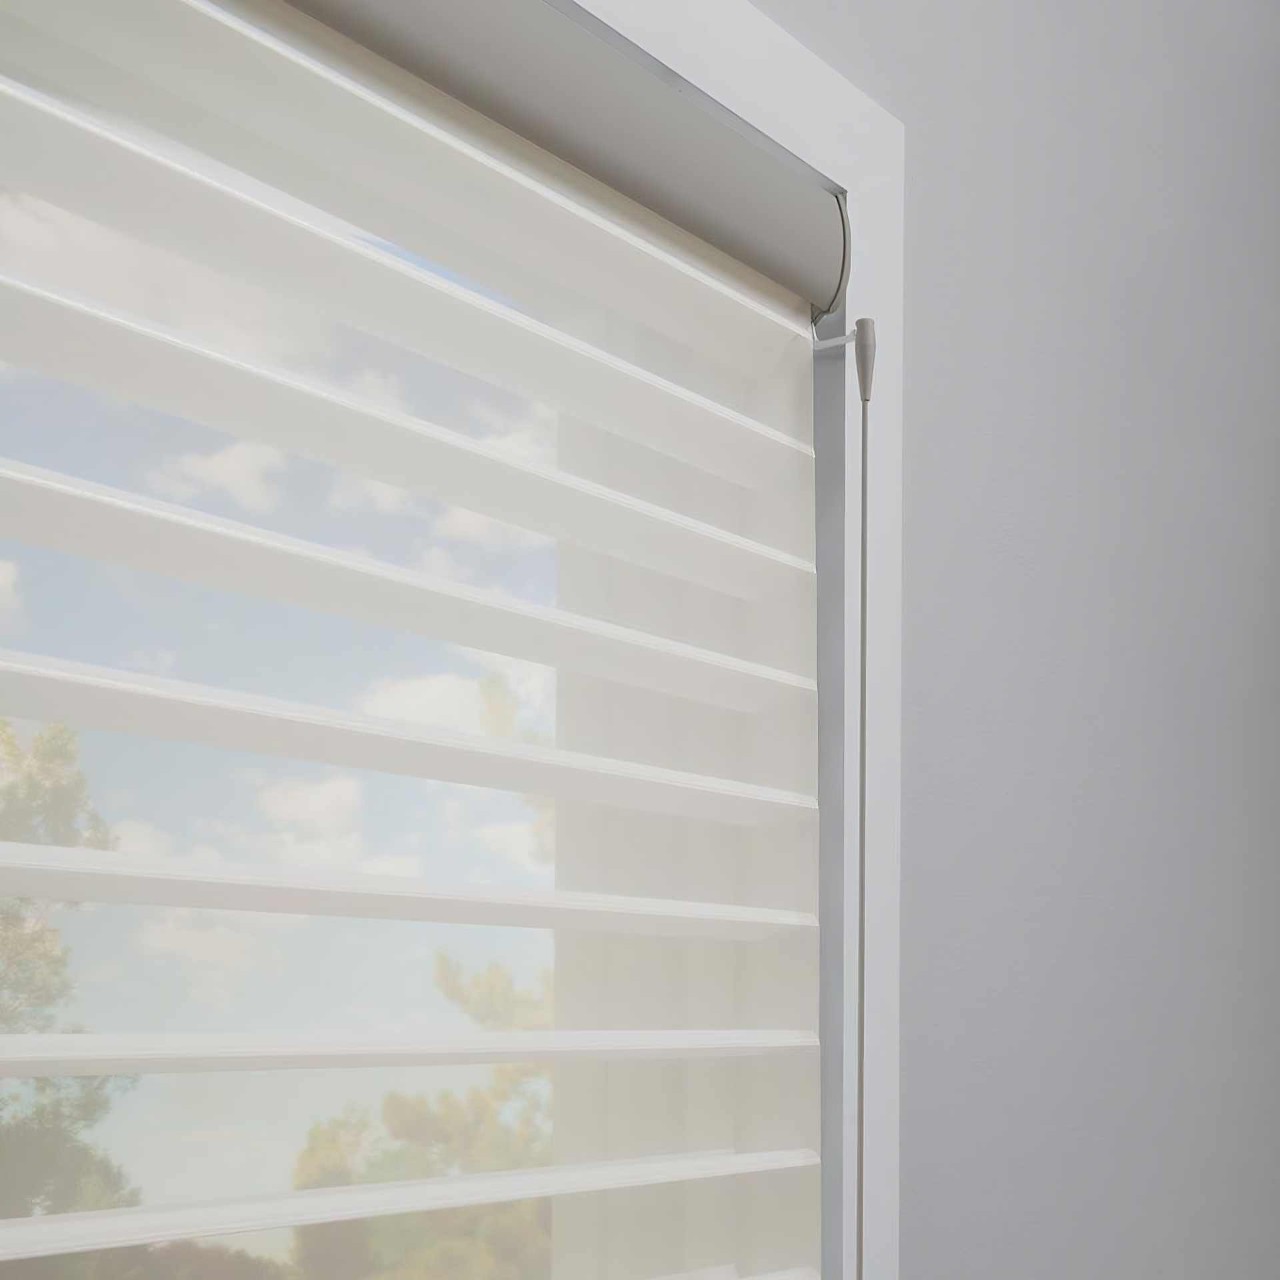 Updating The Windows In Your Home, Hunter Douglas Silhouette® Sheer Shades near Laredo, Texas (TX)